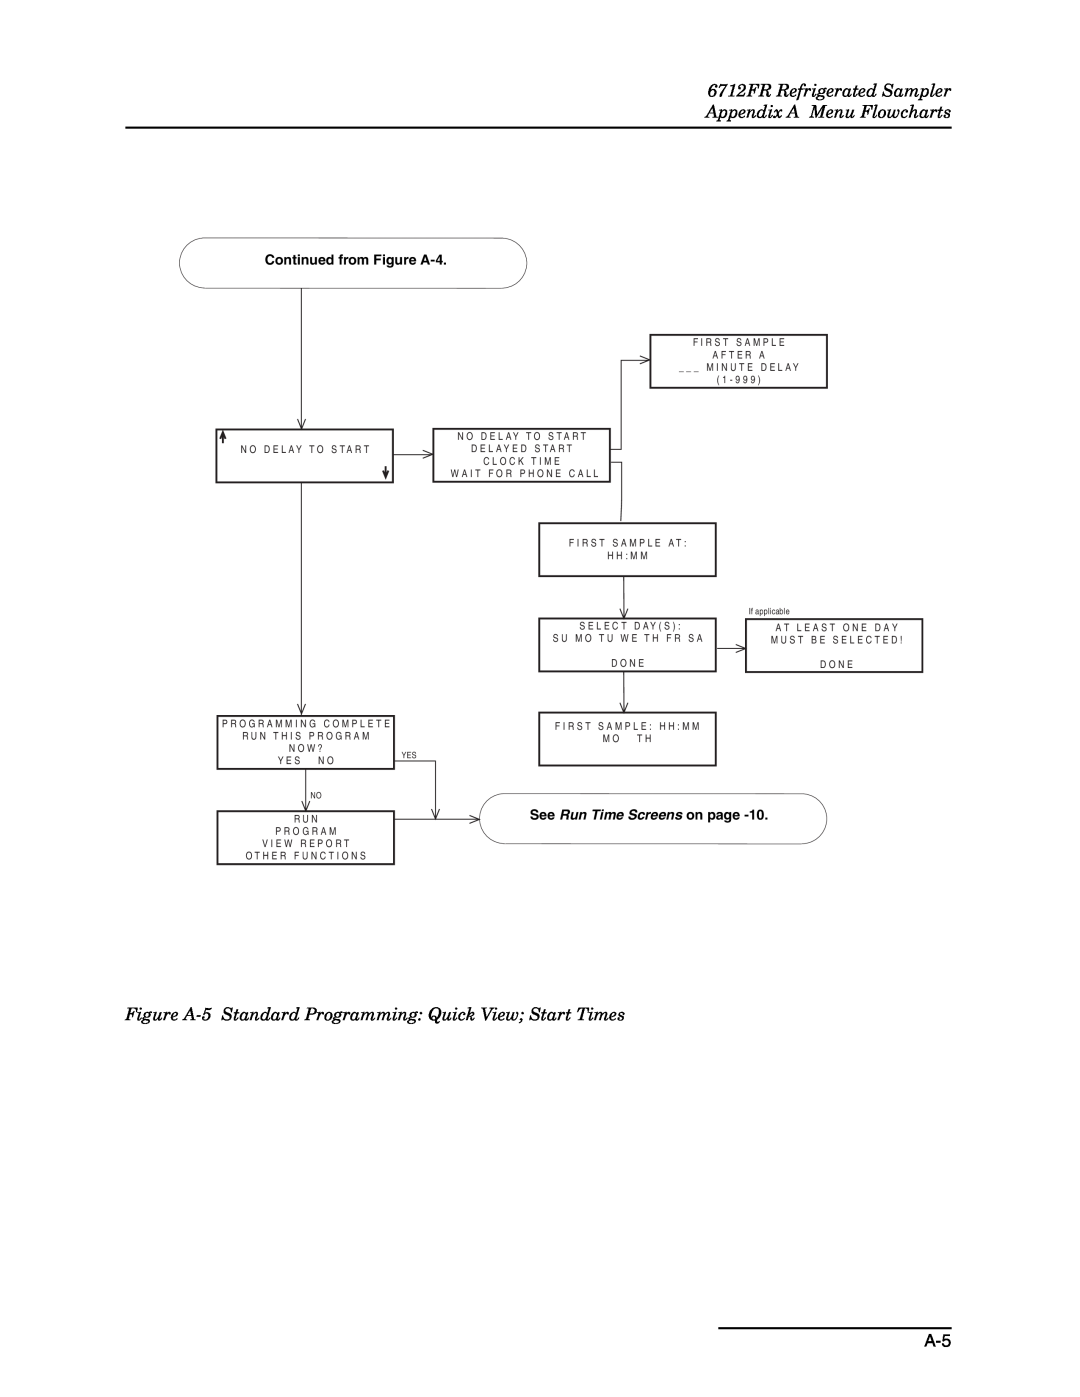 Teledyne 6712FR Refrigerated Sampler Appendix A Menu Flowcharts, Figure A-5 Standard Programming Quick View Start Times 